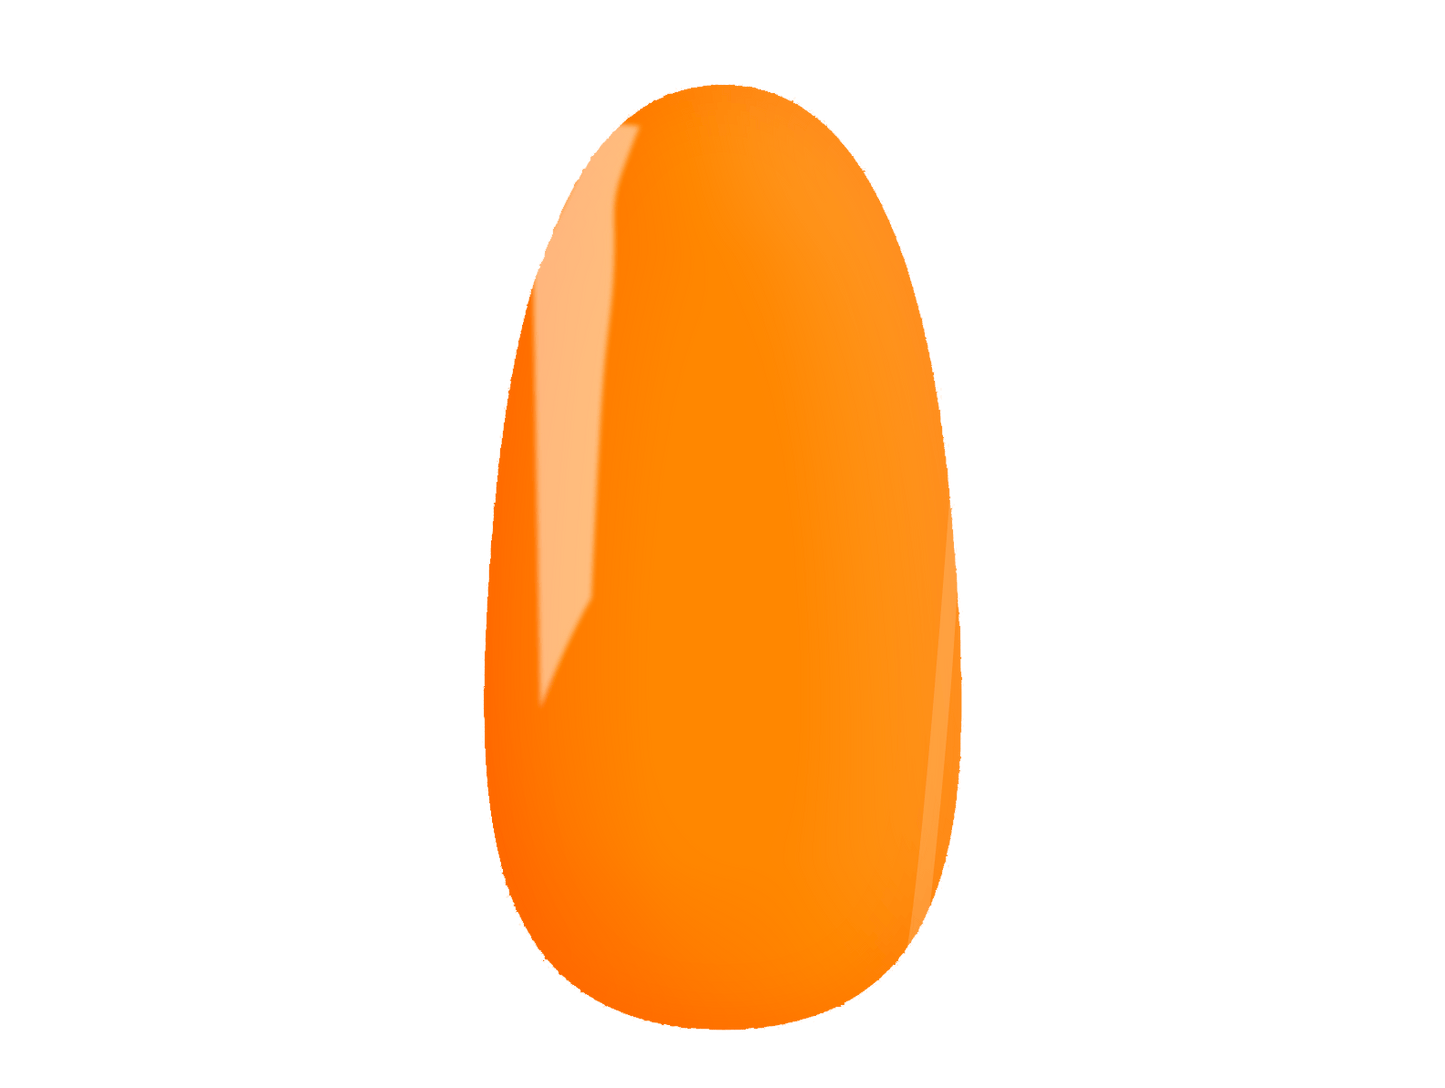 La Marietta - Orange Gel Nail Polish - 14 Day Manicure - 1